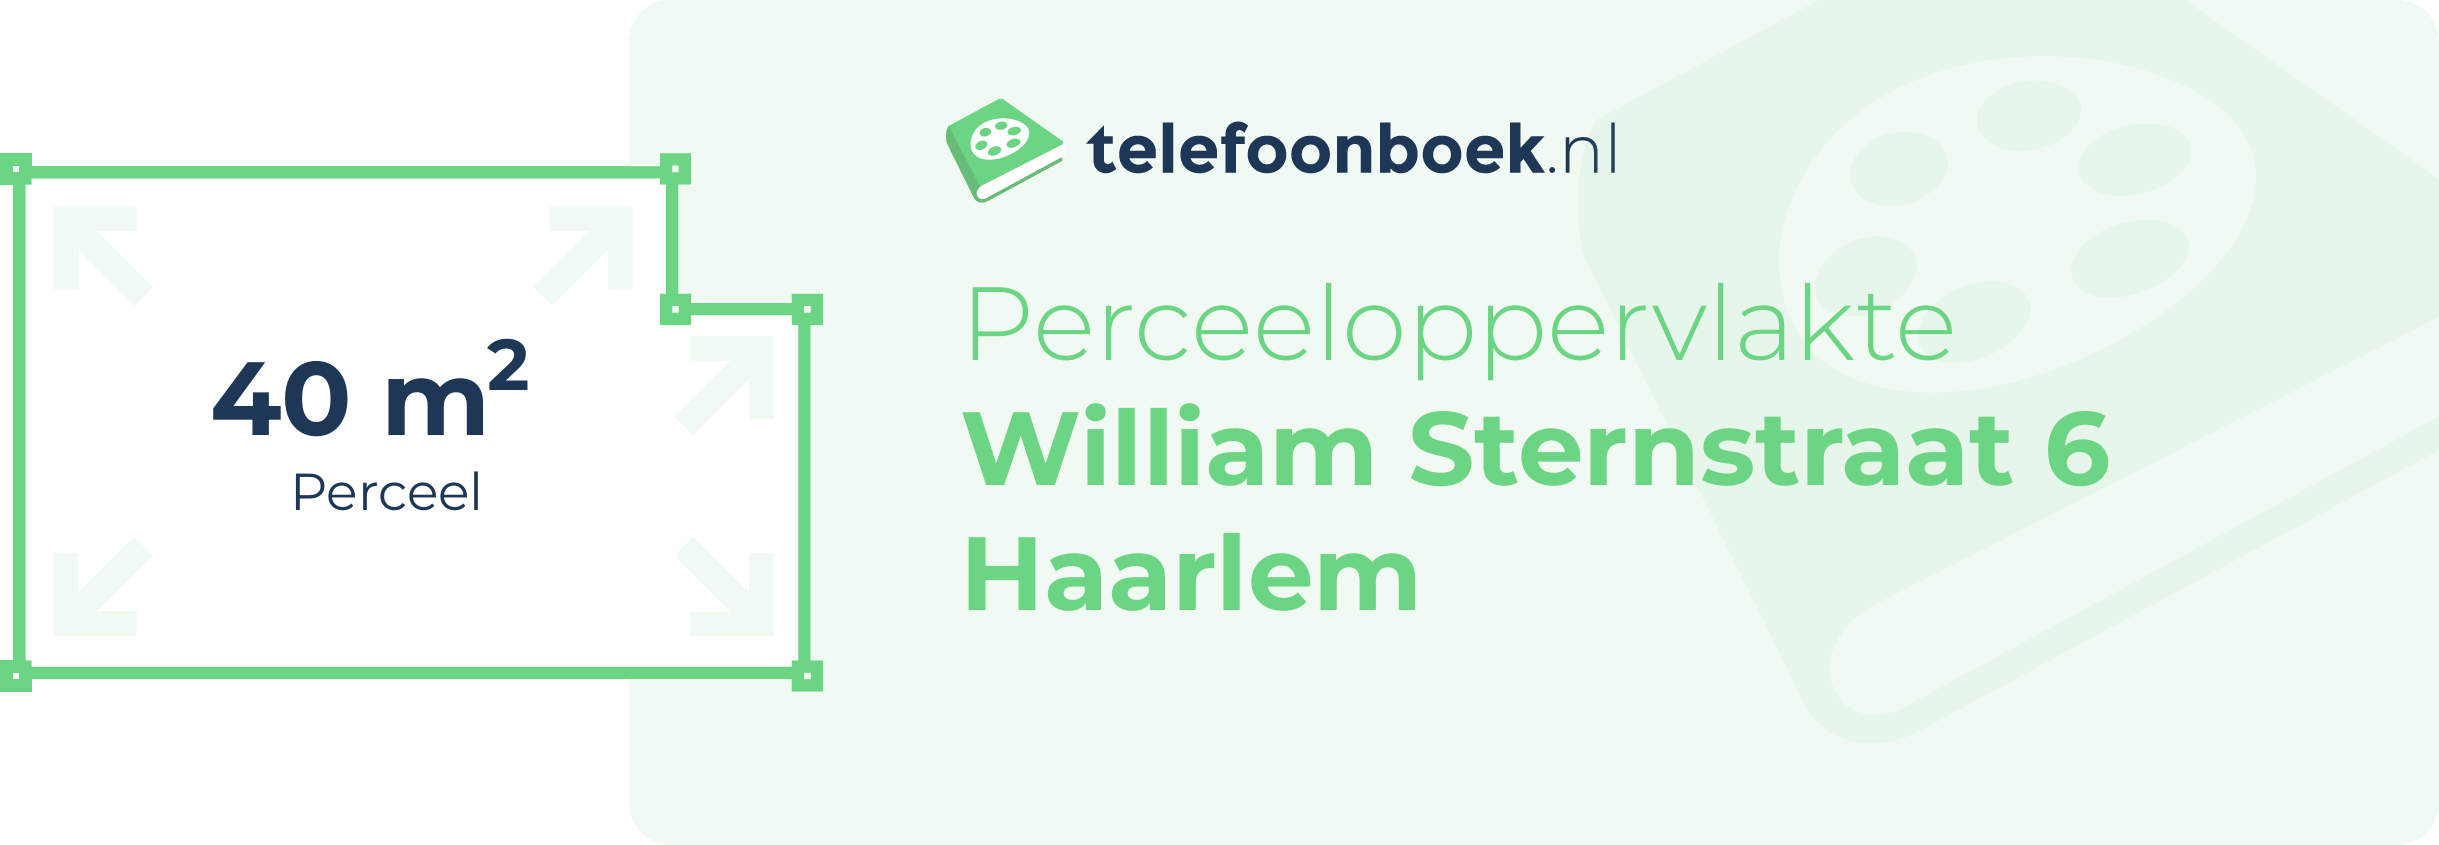 Perceeloppervlakte William Sternstraat 6 Haarlem